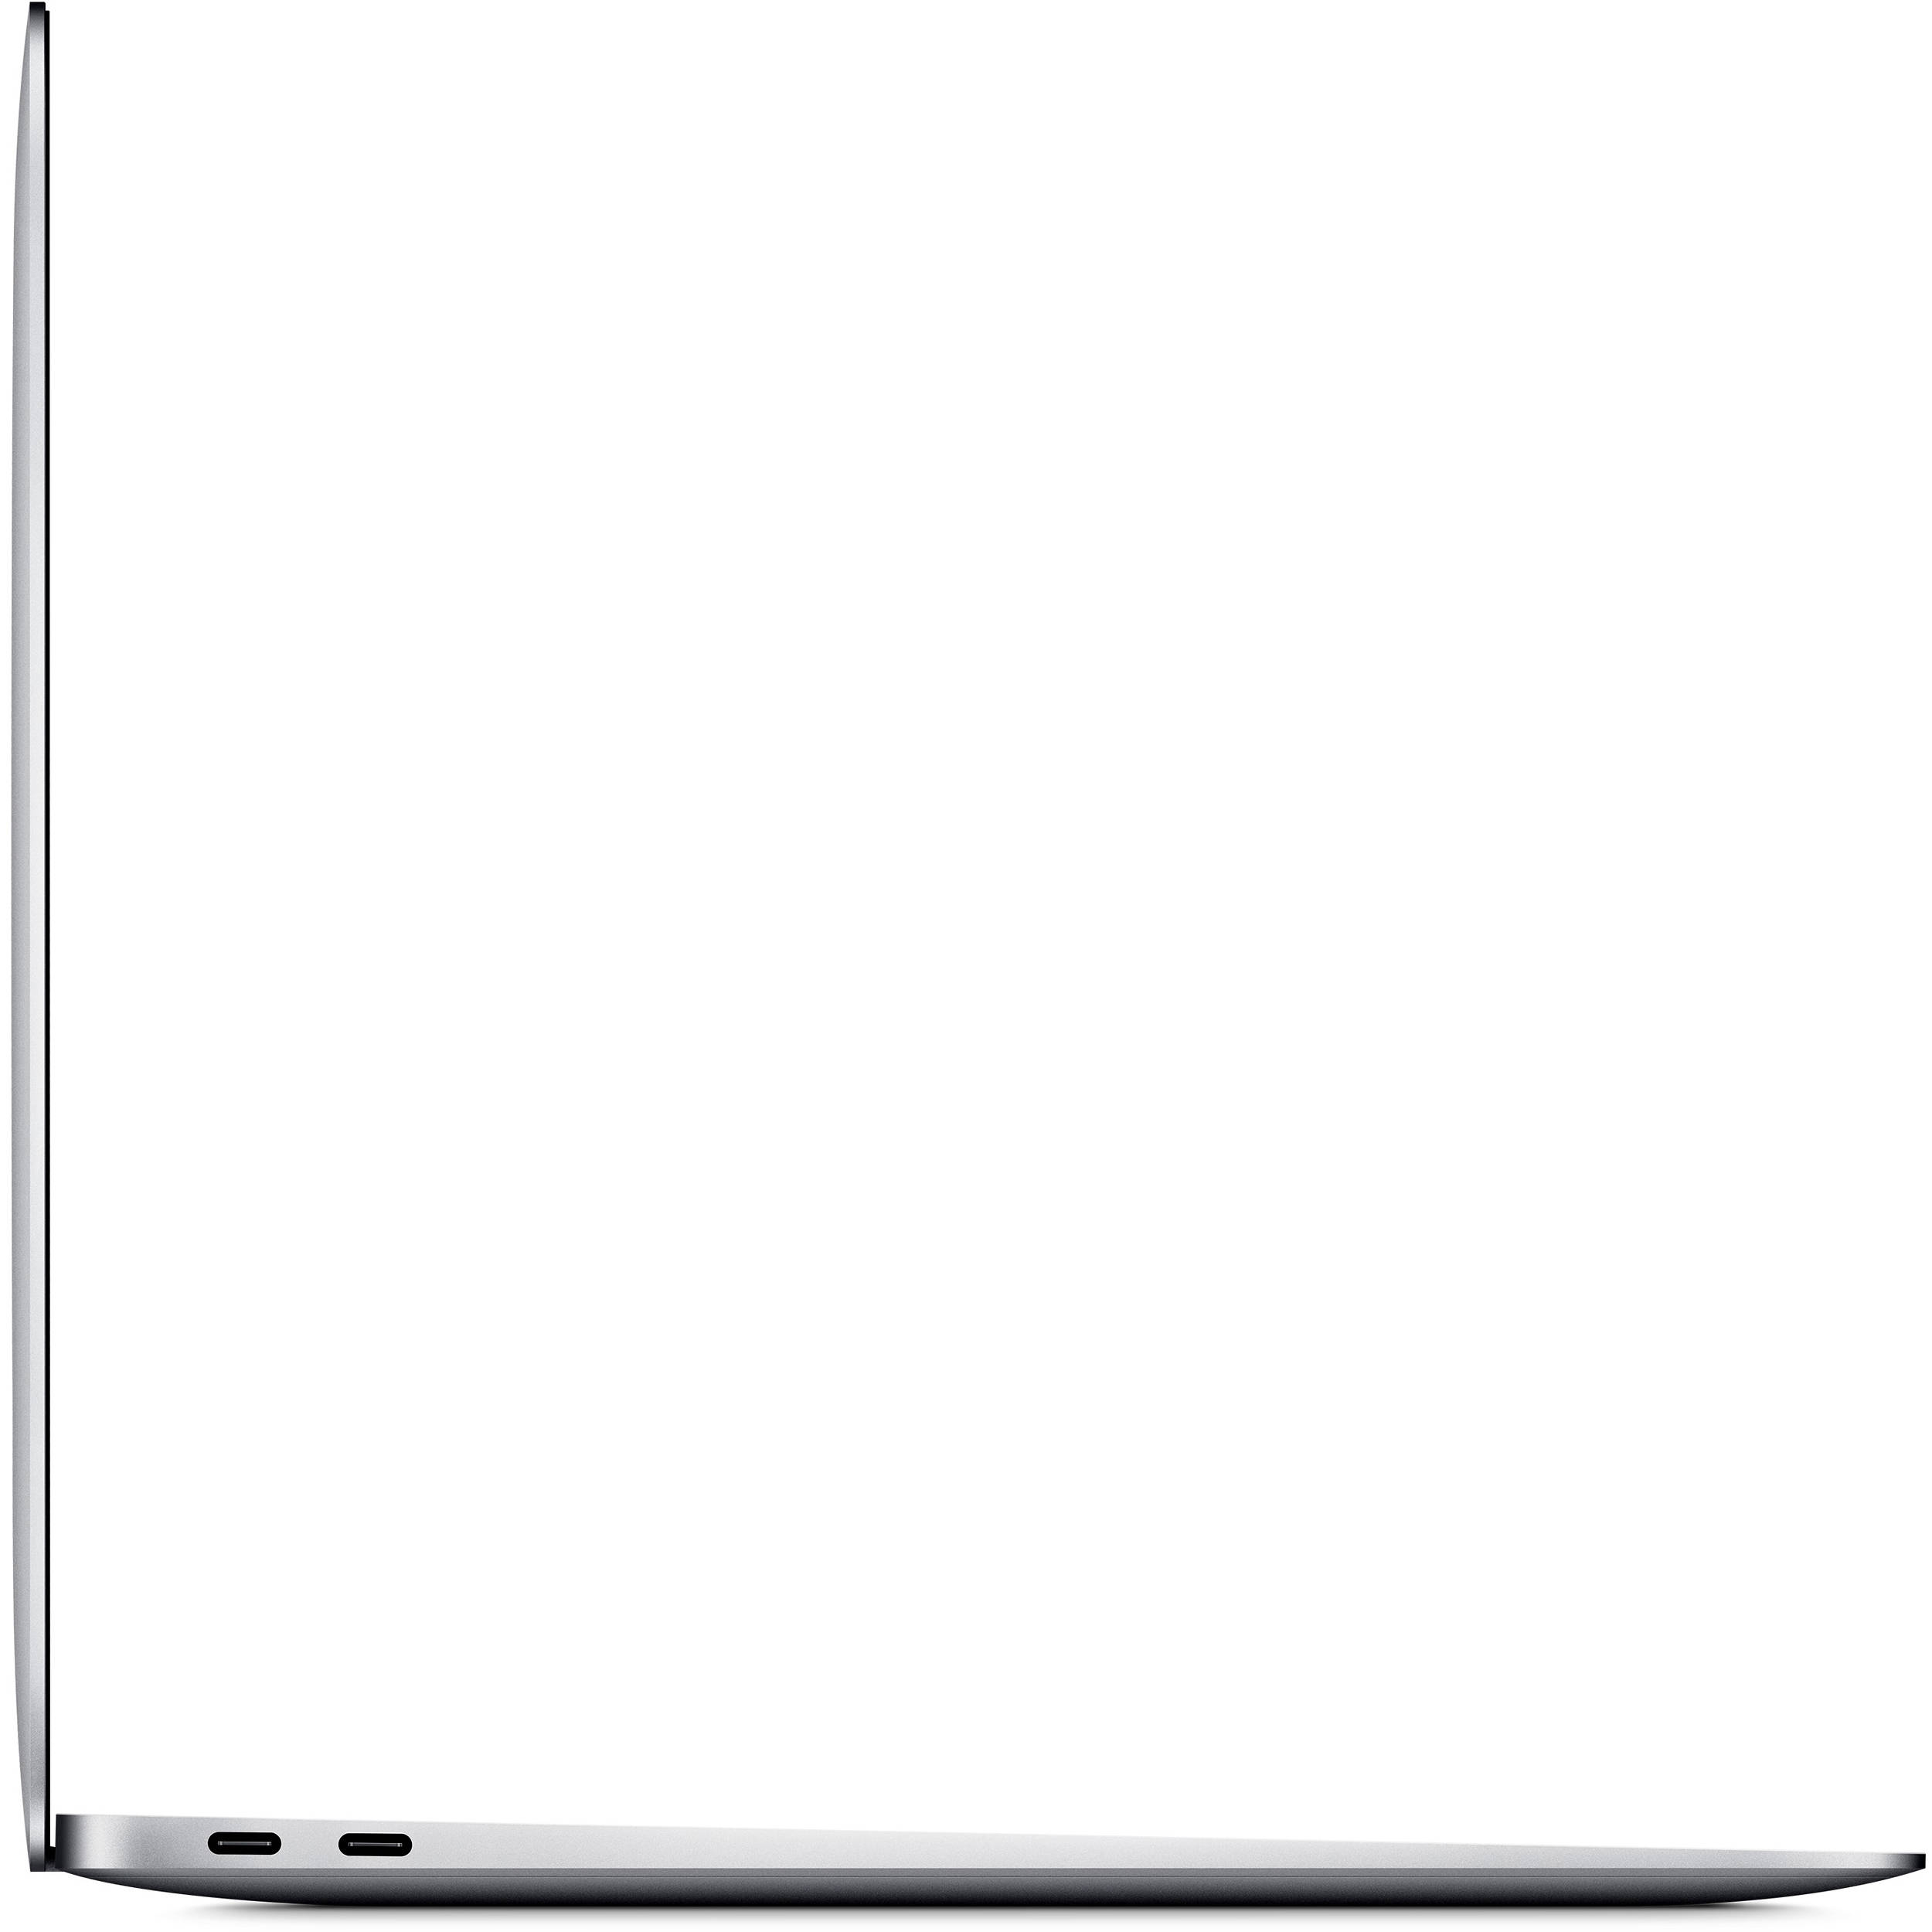 Apple MacBook Air 13.3" Laptop - Apple M1 chip - 8GB Memory - 256GB SSD (Late 2020) - Space Gray